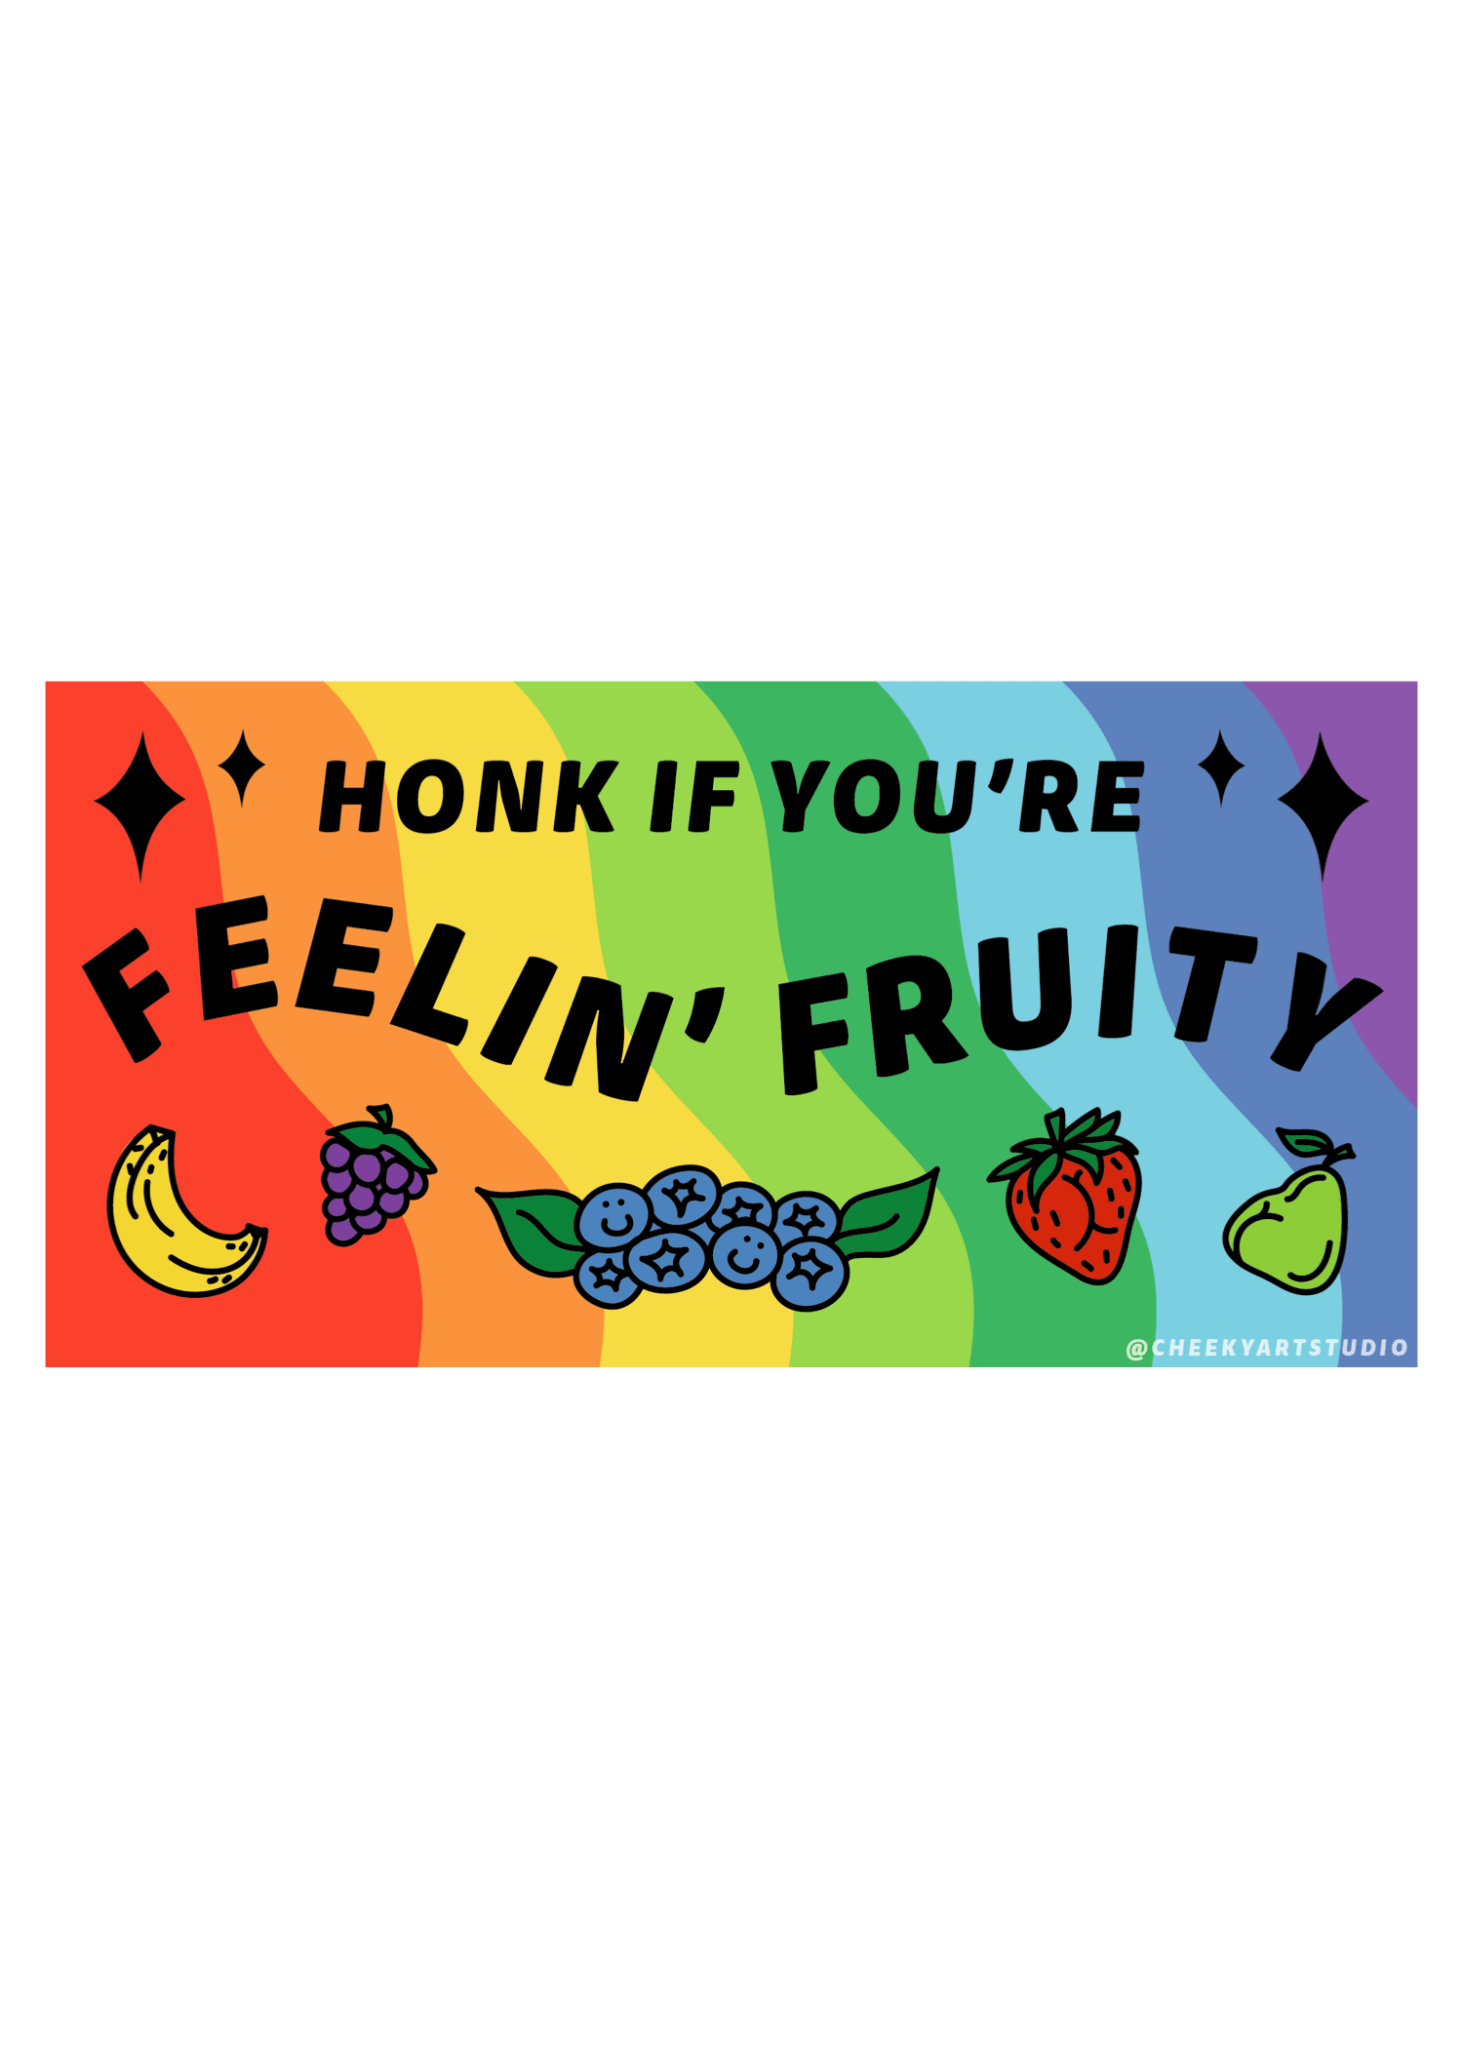 Feelin’ Fruity Bumper Sticker - Cheeky Art Studio-banana-banana buz-Blueberry